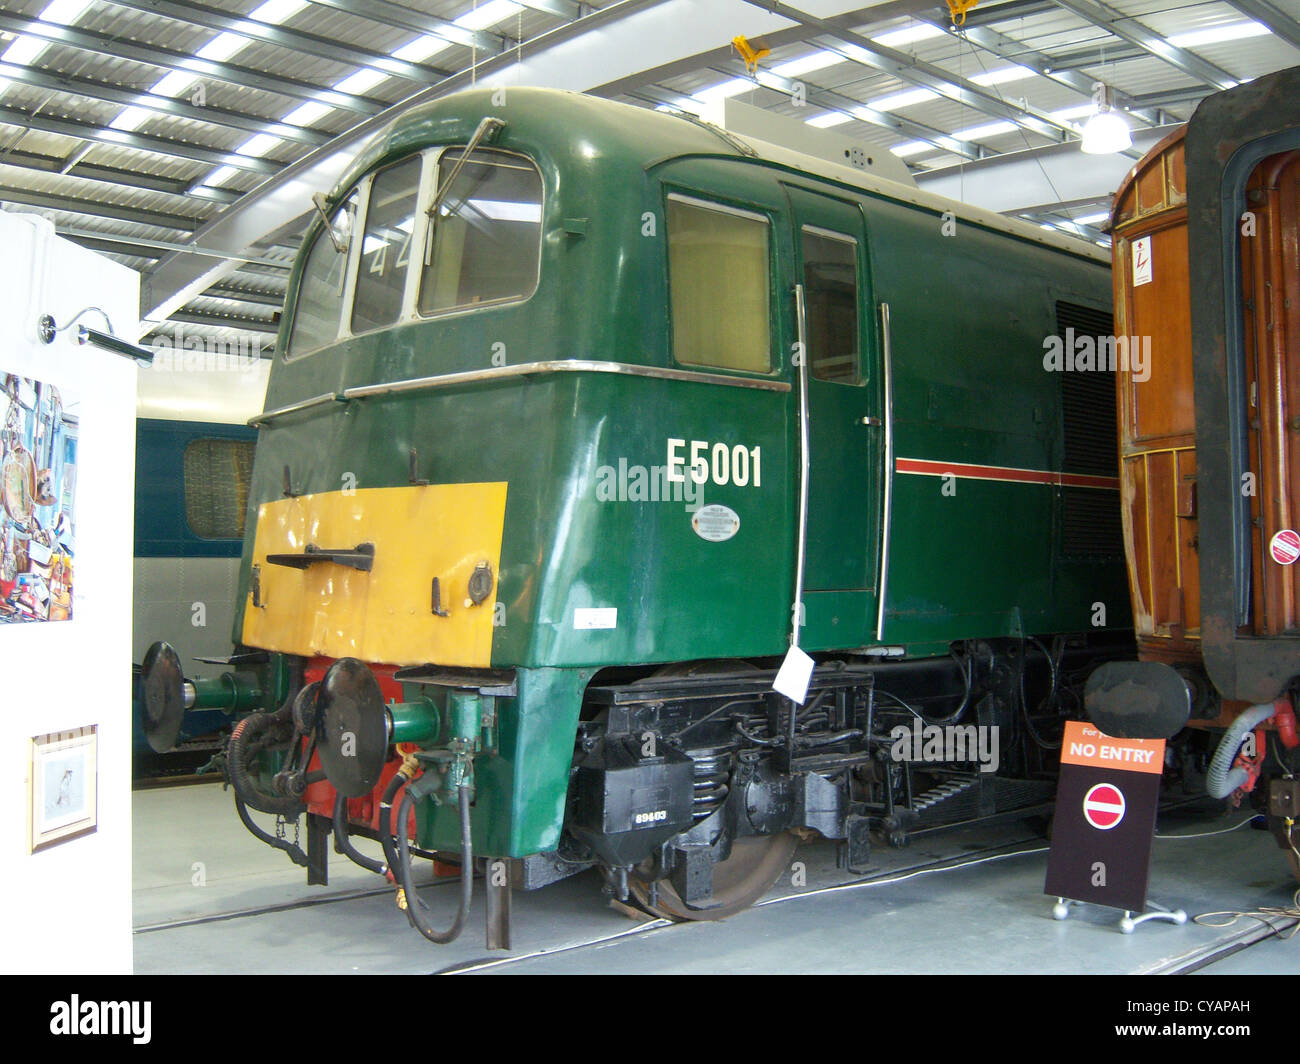 Locomotion railway museum in Shildon, County Durham. Stock Photo